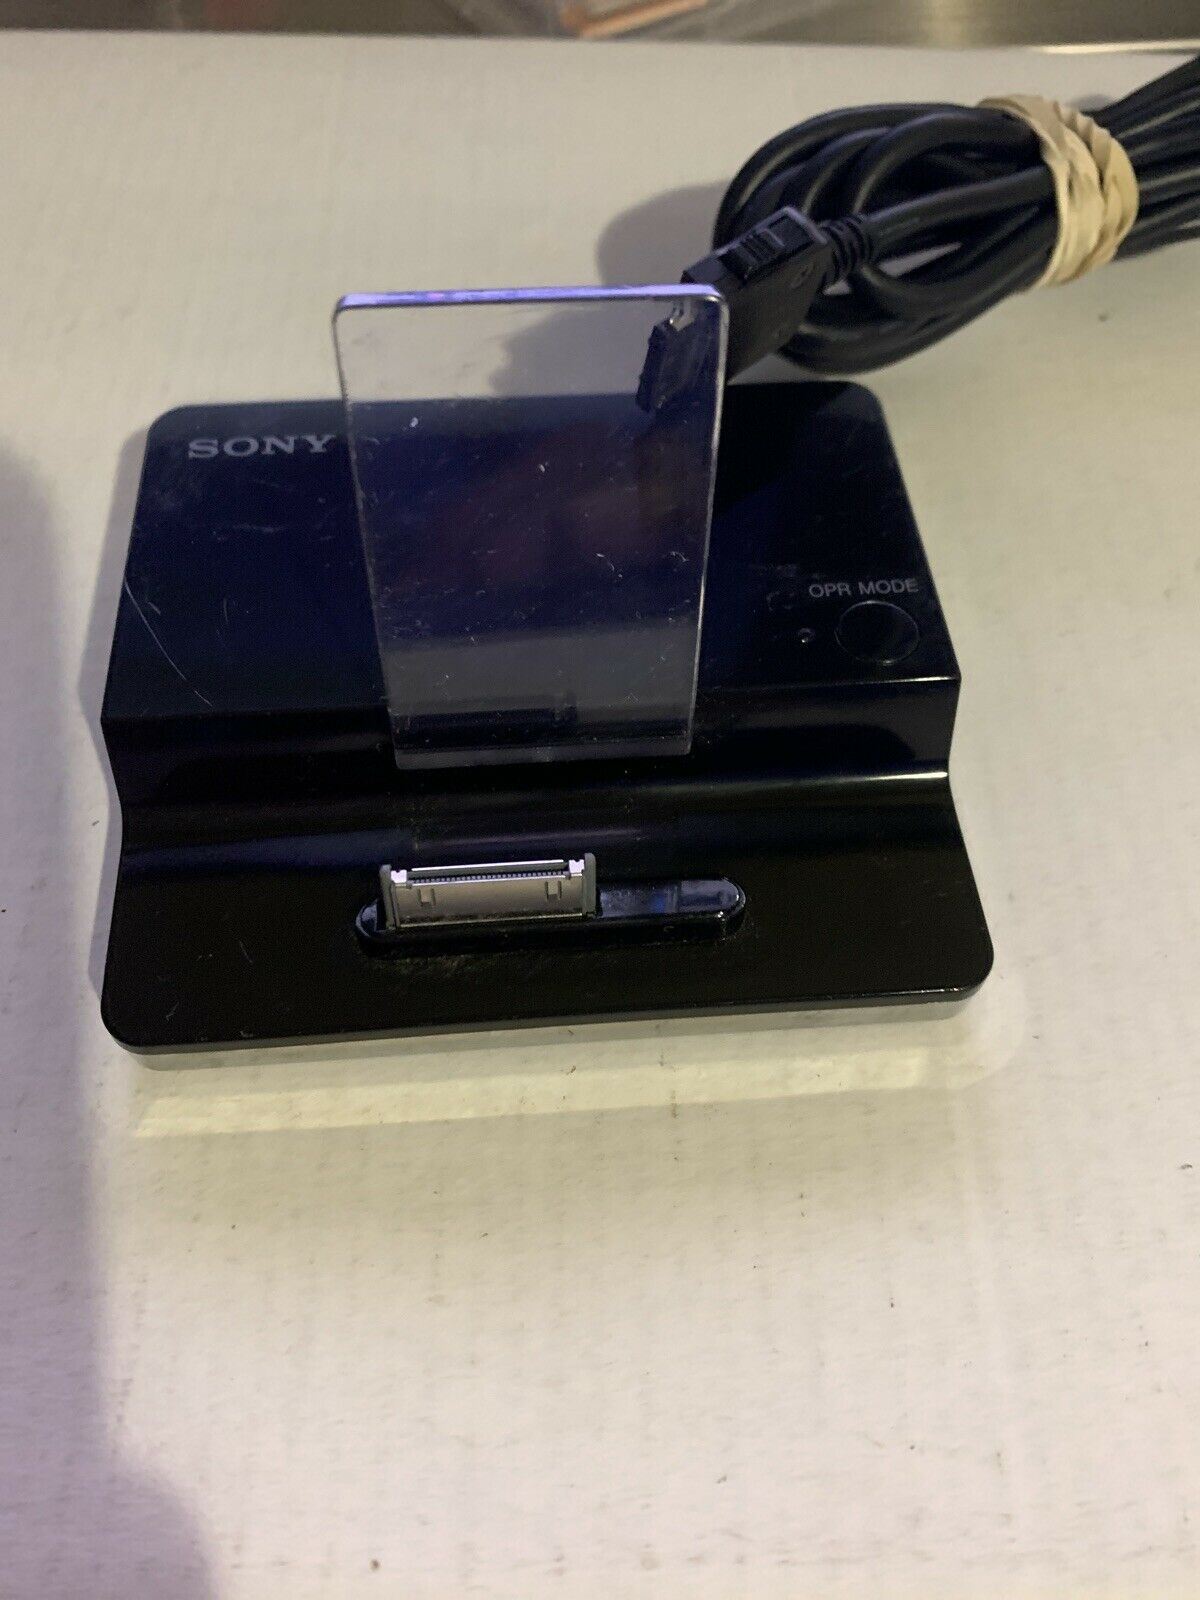 Sony TDM-iP1 Digital Media Port Adapter for iPod